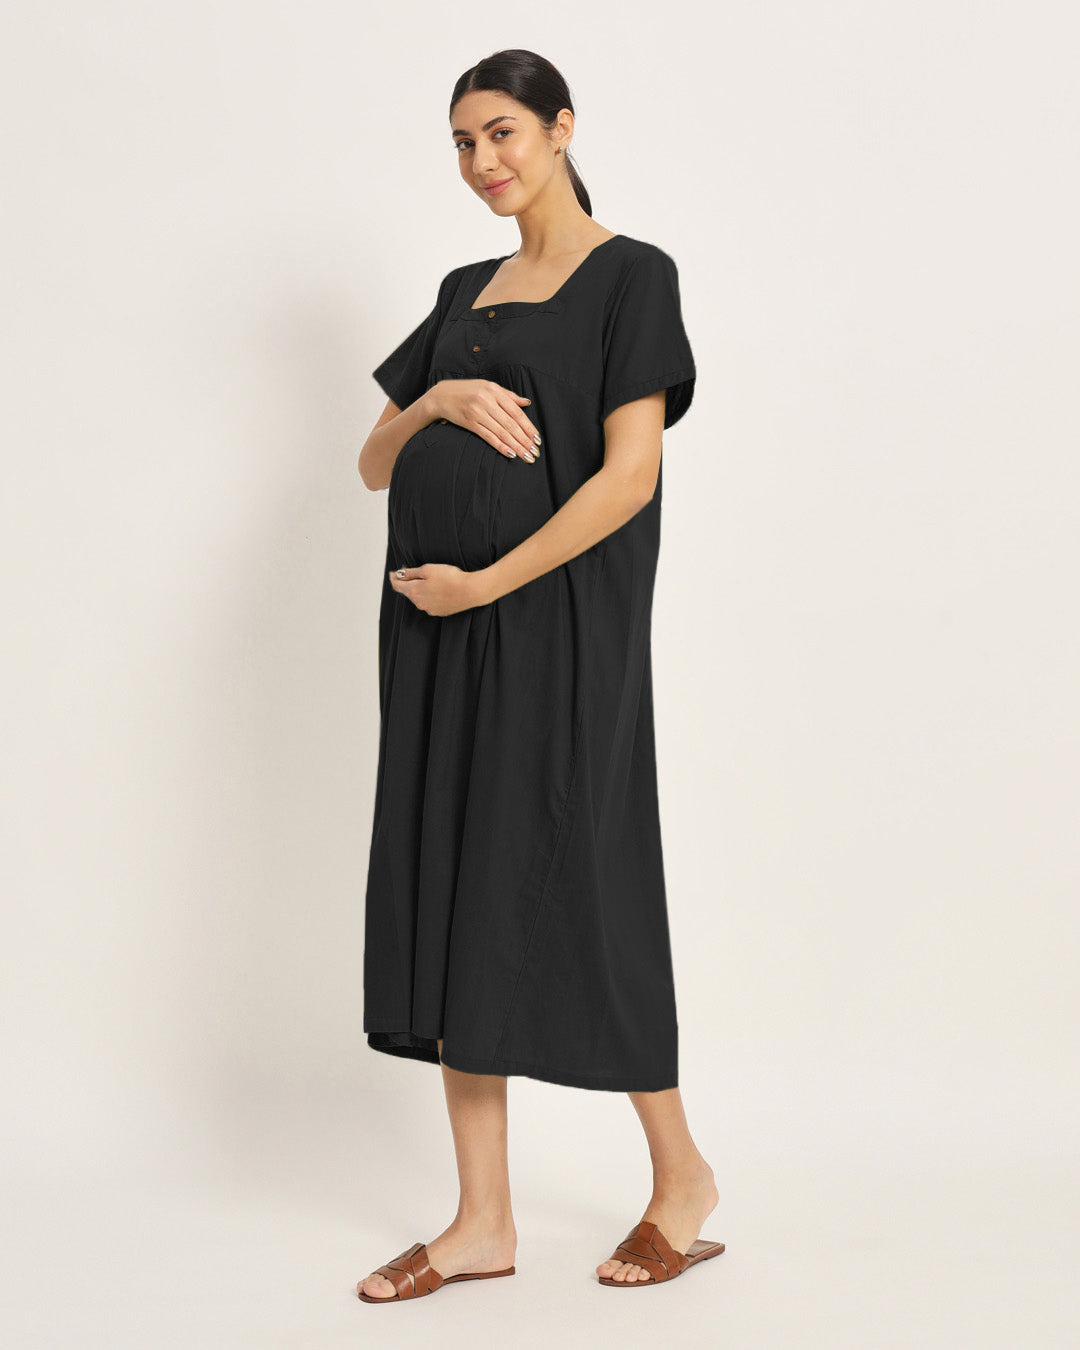 Combo: Black & Russet Red Bump Blessing Maternity & Nursing Dress - Set of 2